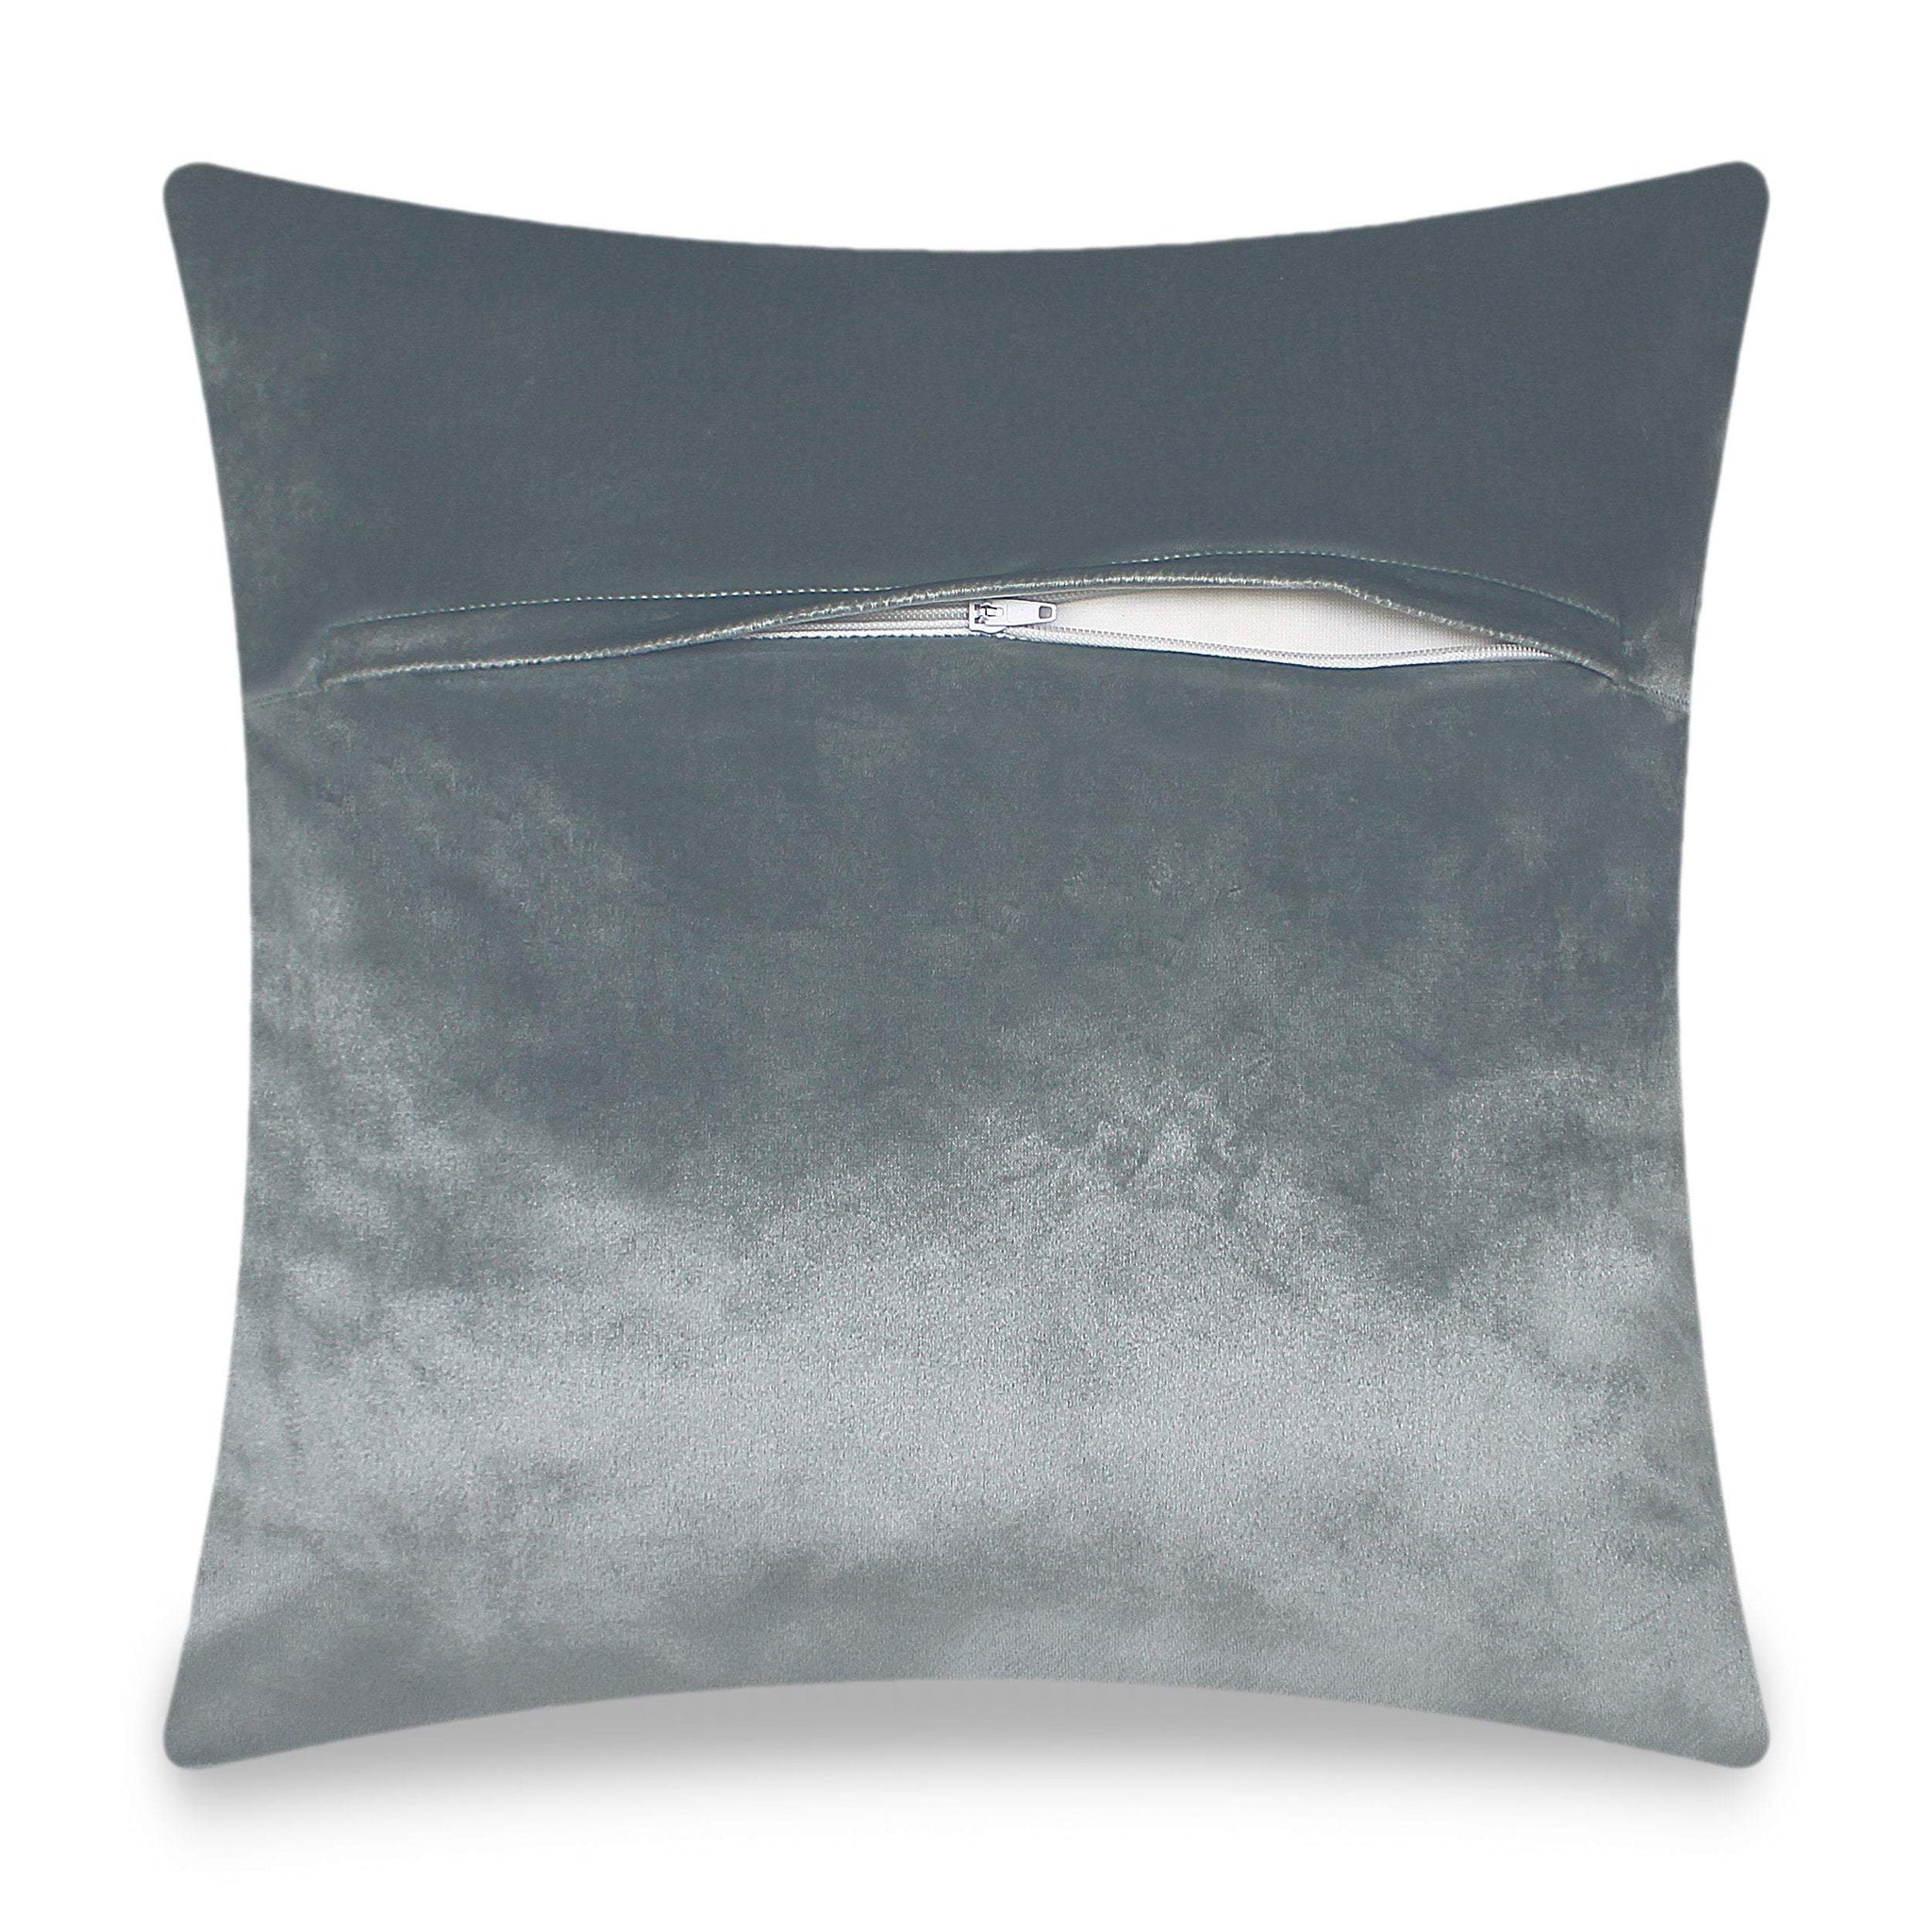 Silver Luxury Baroque Style Decorative Embroidered Cushion Cover Velvet Pillow Case Home European Sofa Throw Pillow